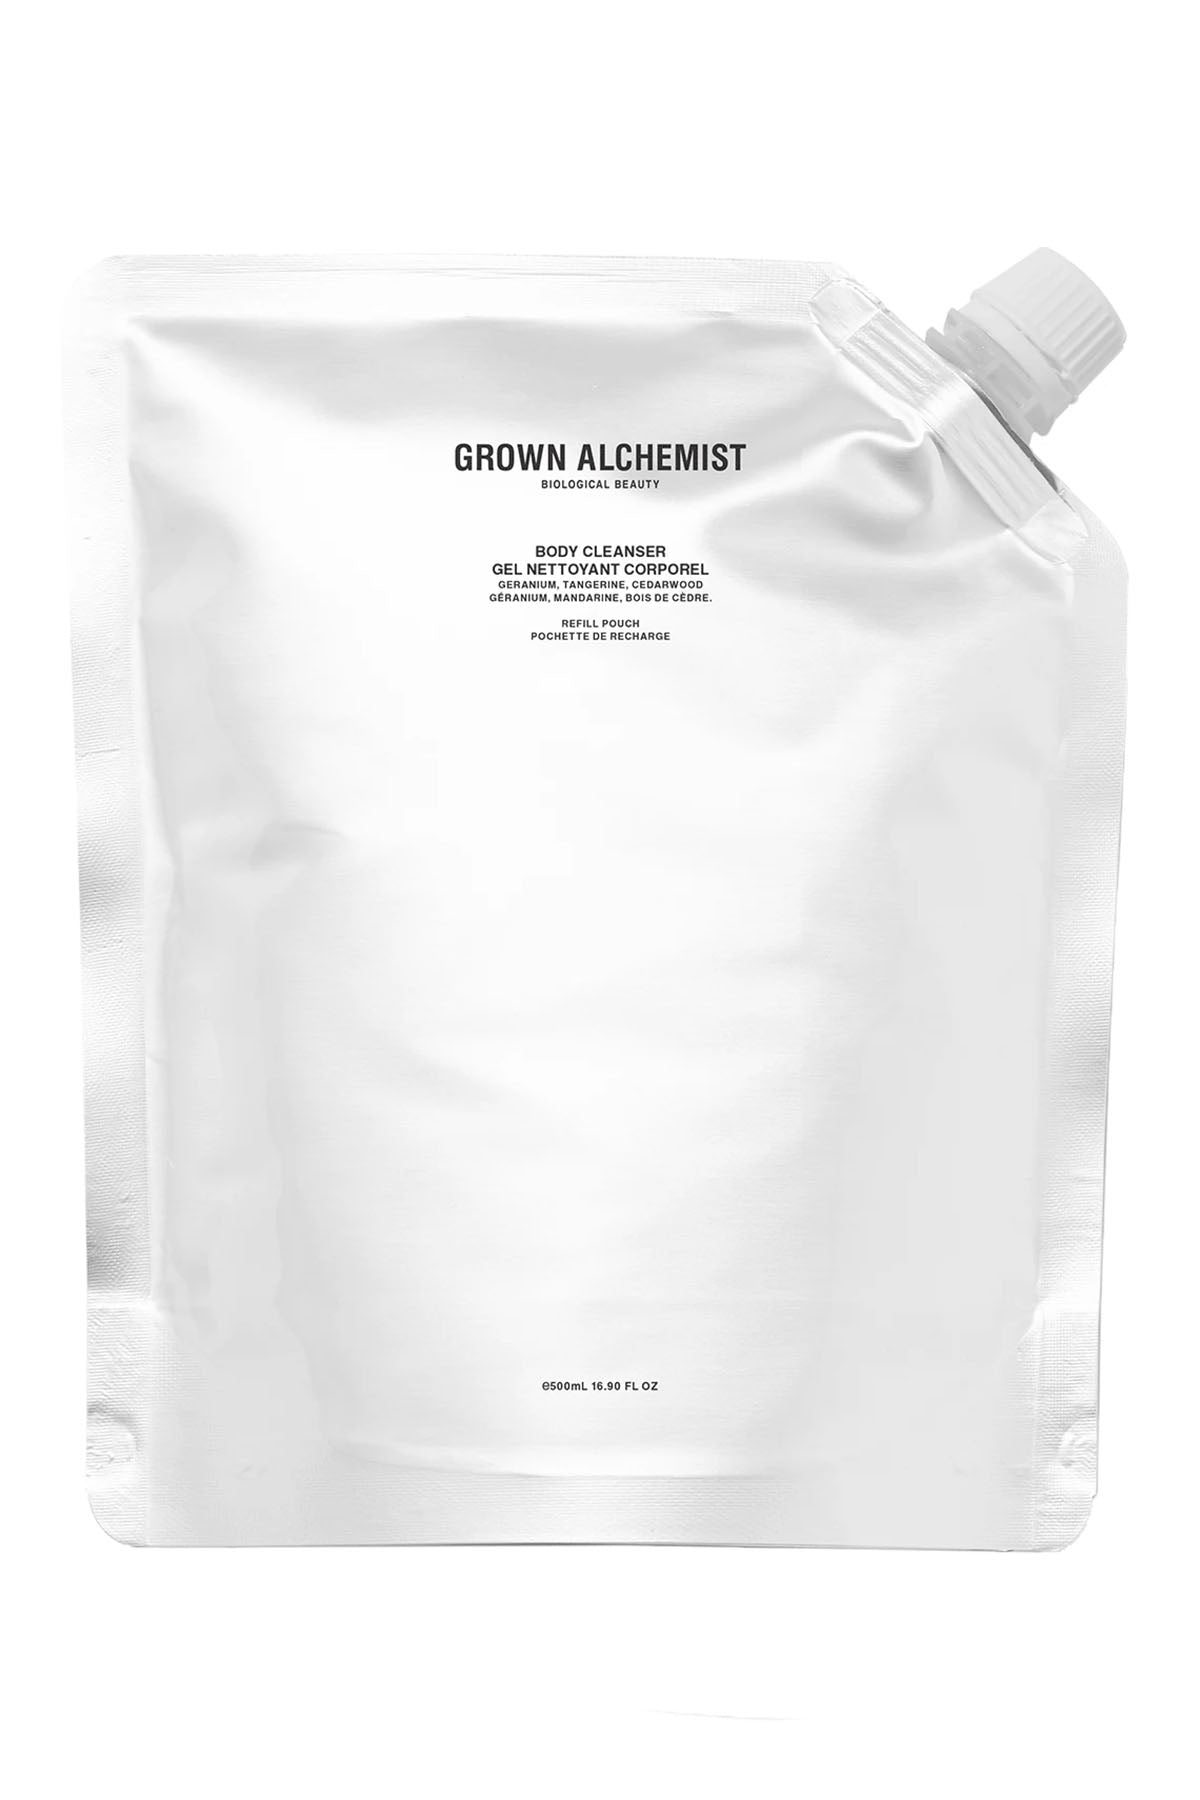 Grown Alchemist Body Cleanser - Geranium, Tangerine, Cedarwood Refill